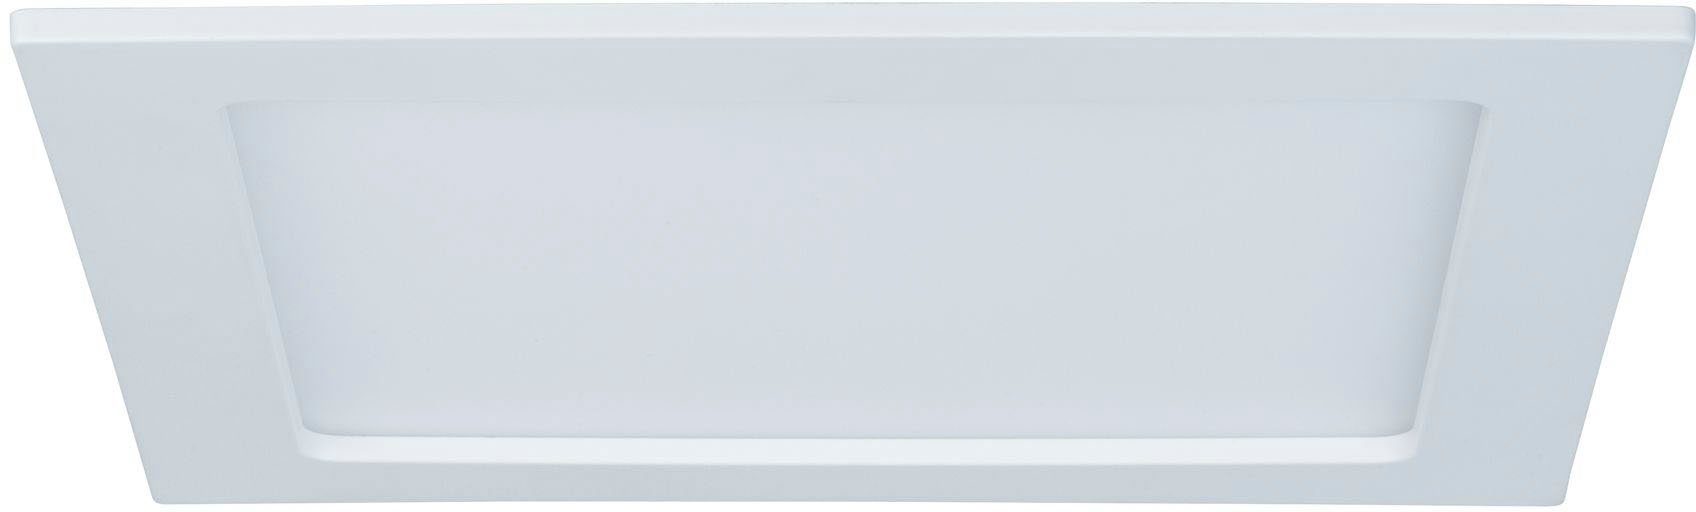 spritzwassergeschützt Paulmann Badleuchte eckig 9W Deckenleuchte, Neutralweiß, LED Panel LED IP44 Dimmbar integriert, Weiß fest